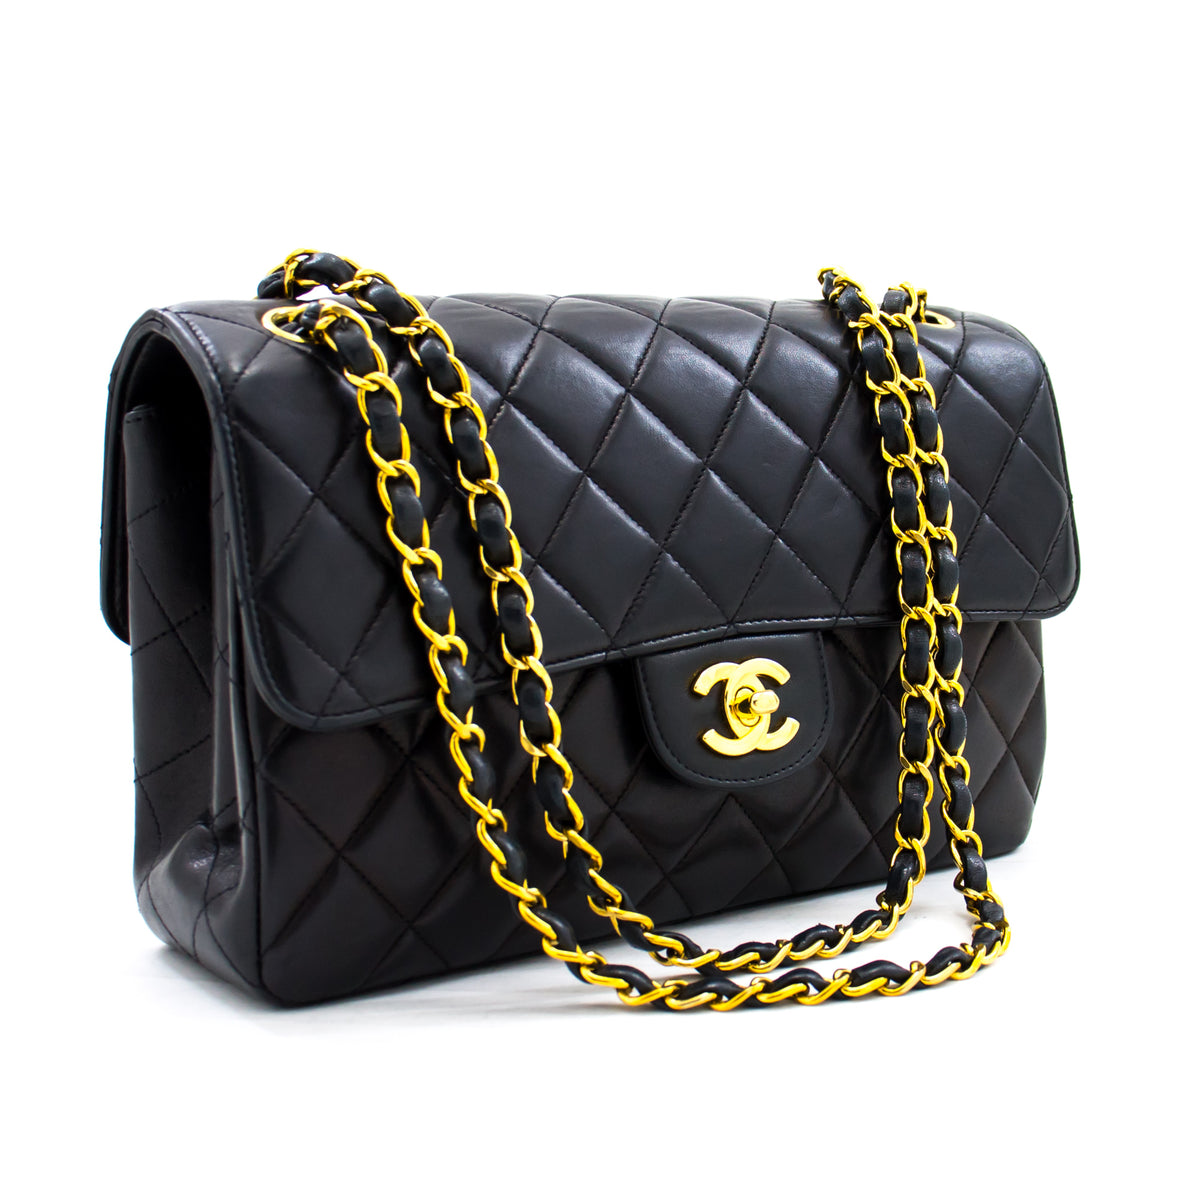 chanel handbag with gold chain